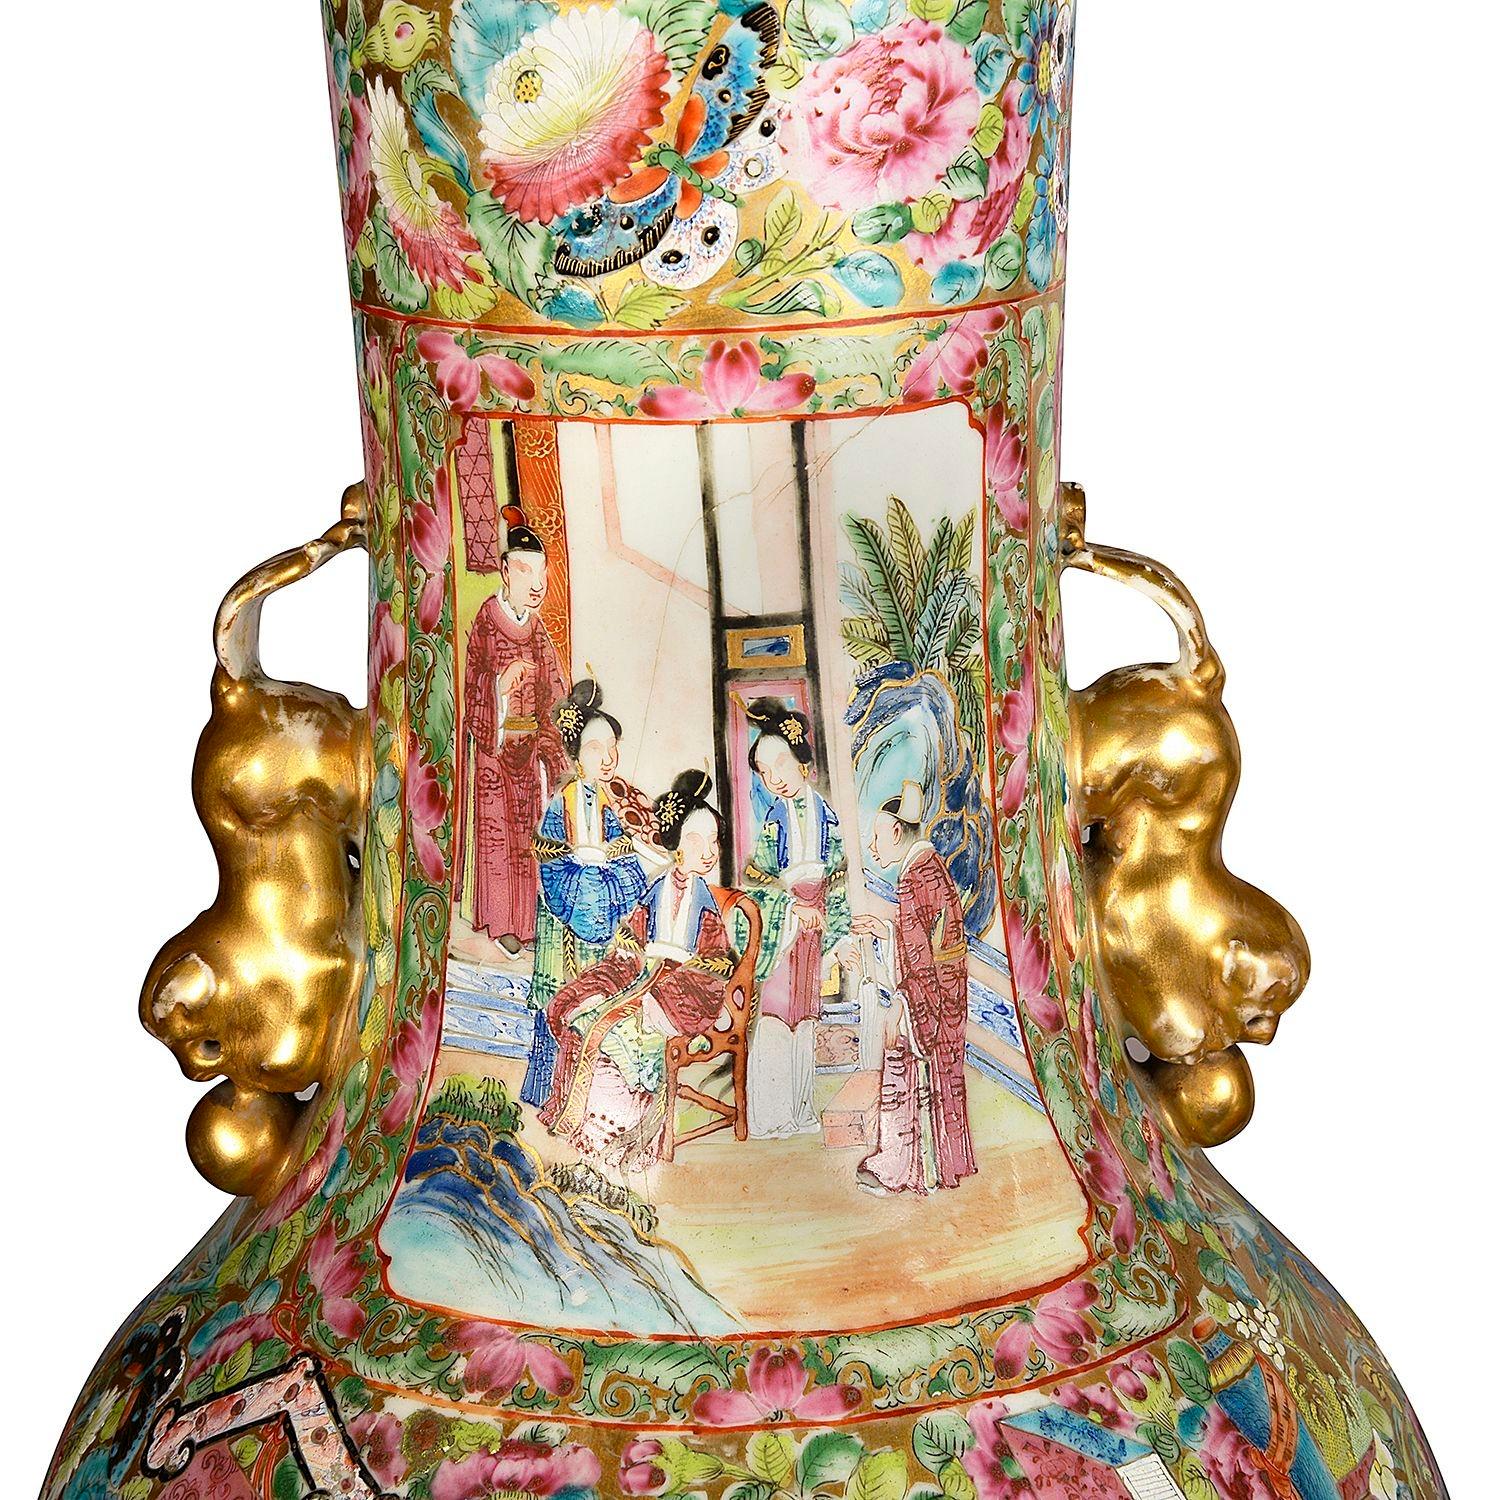 Paar Rosenmedaillon-Vasen/Lampen, 19. Jahrhundert. (Chinesischer Export)